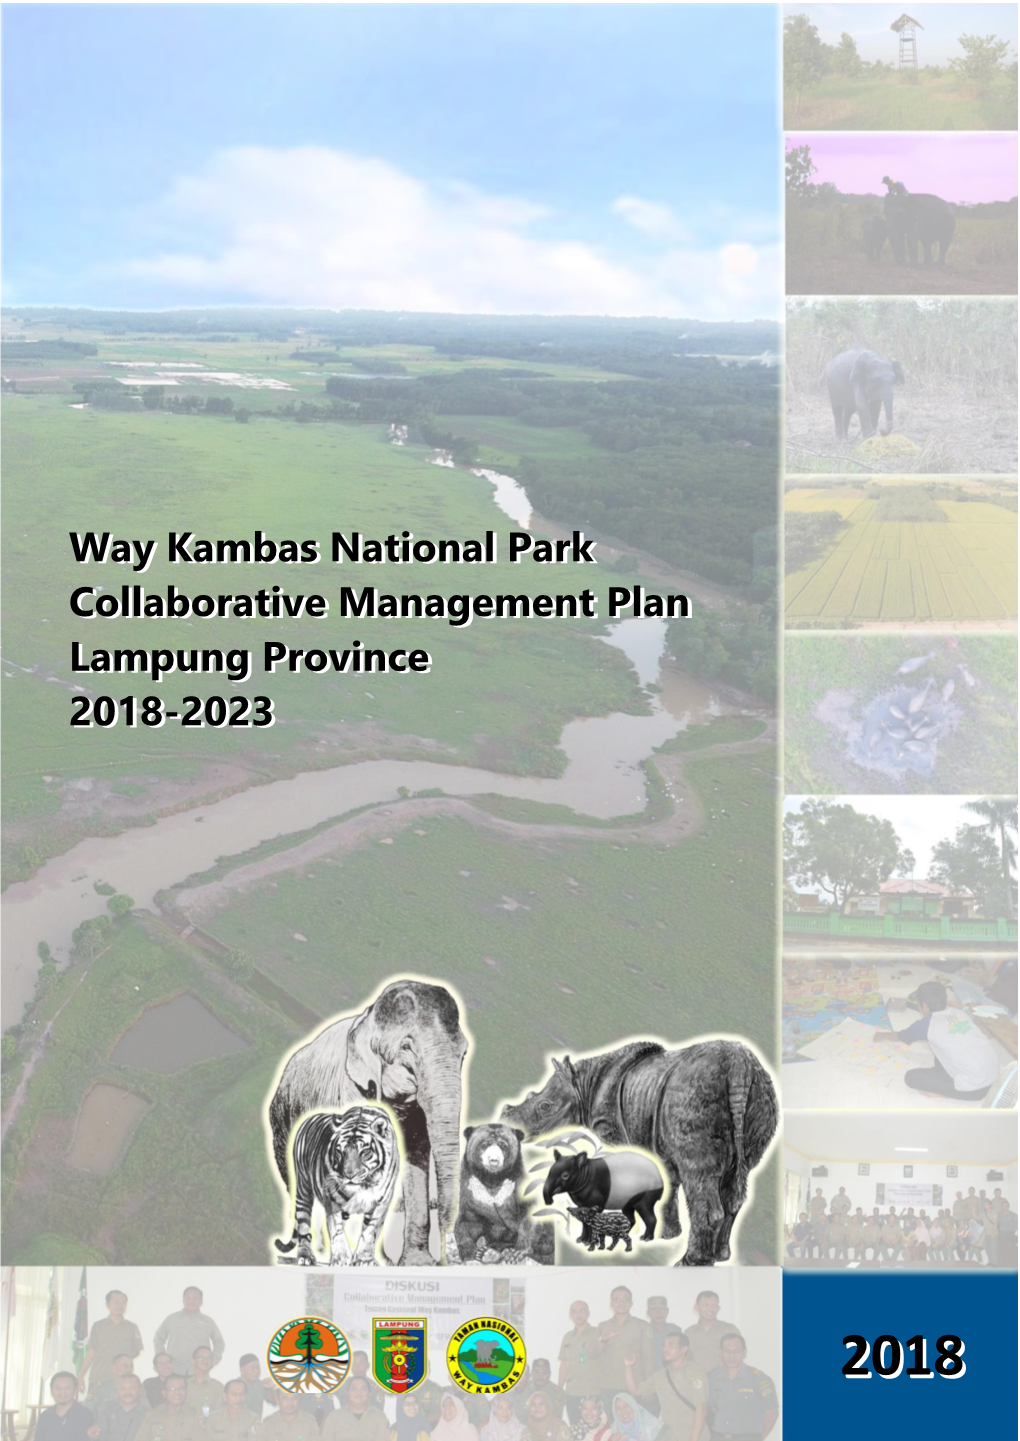 Way Kambas National Park Collaborative Management Plan Lampung Province 2018 - 2023